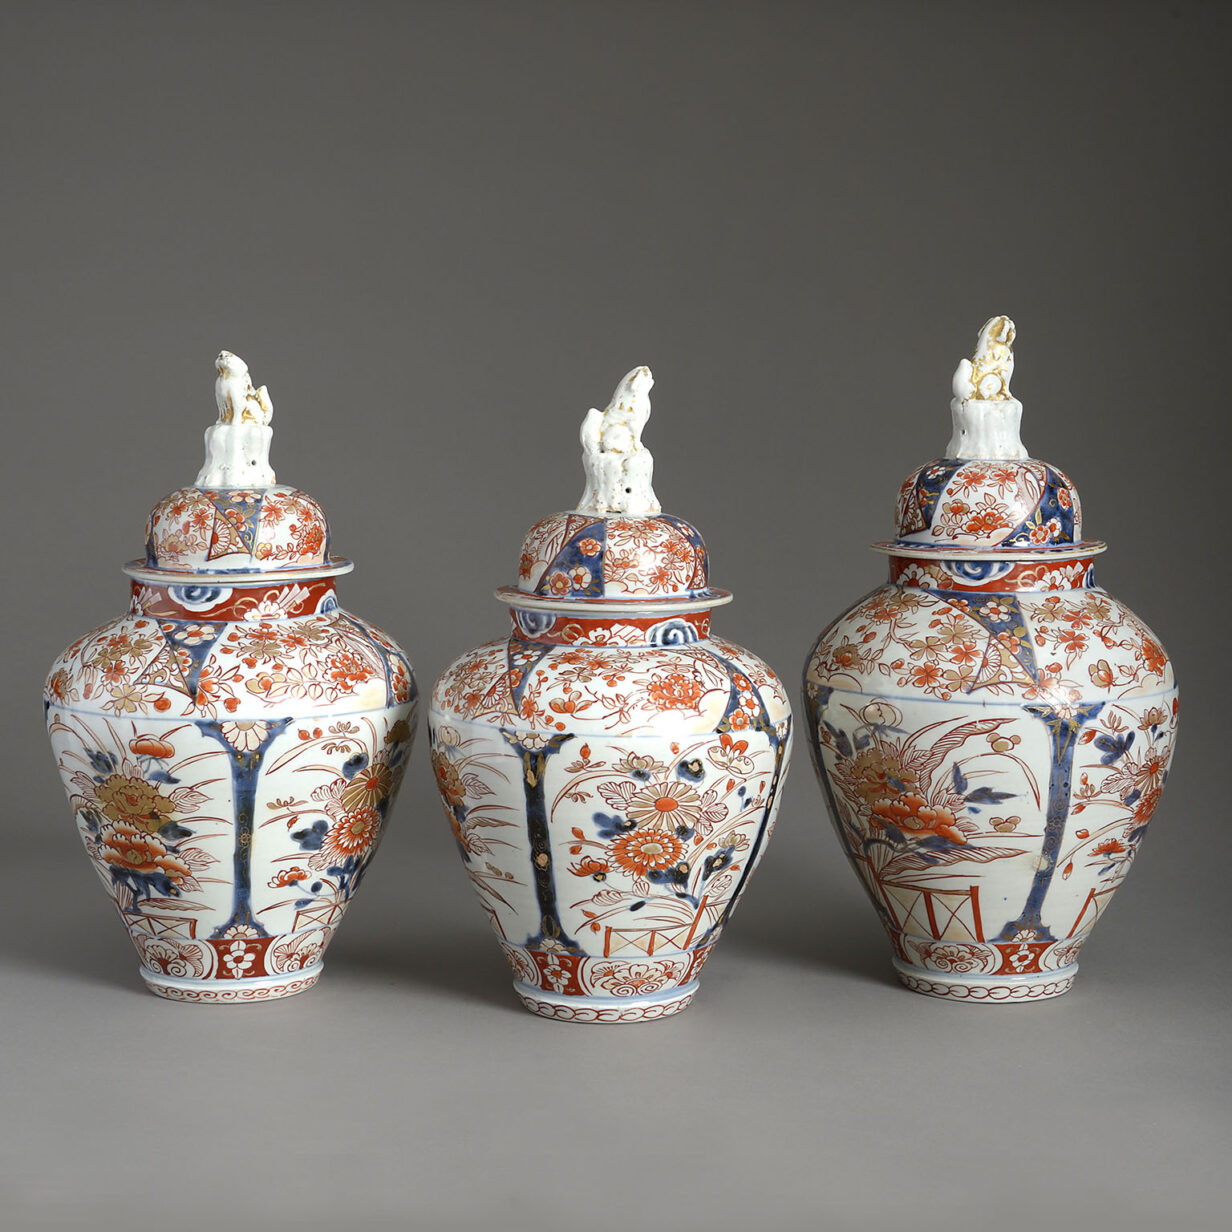 Garniture of three imari vases